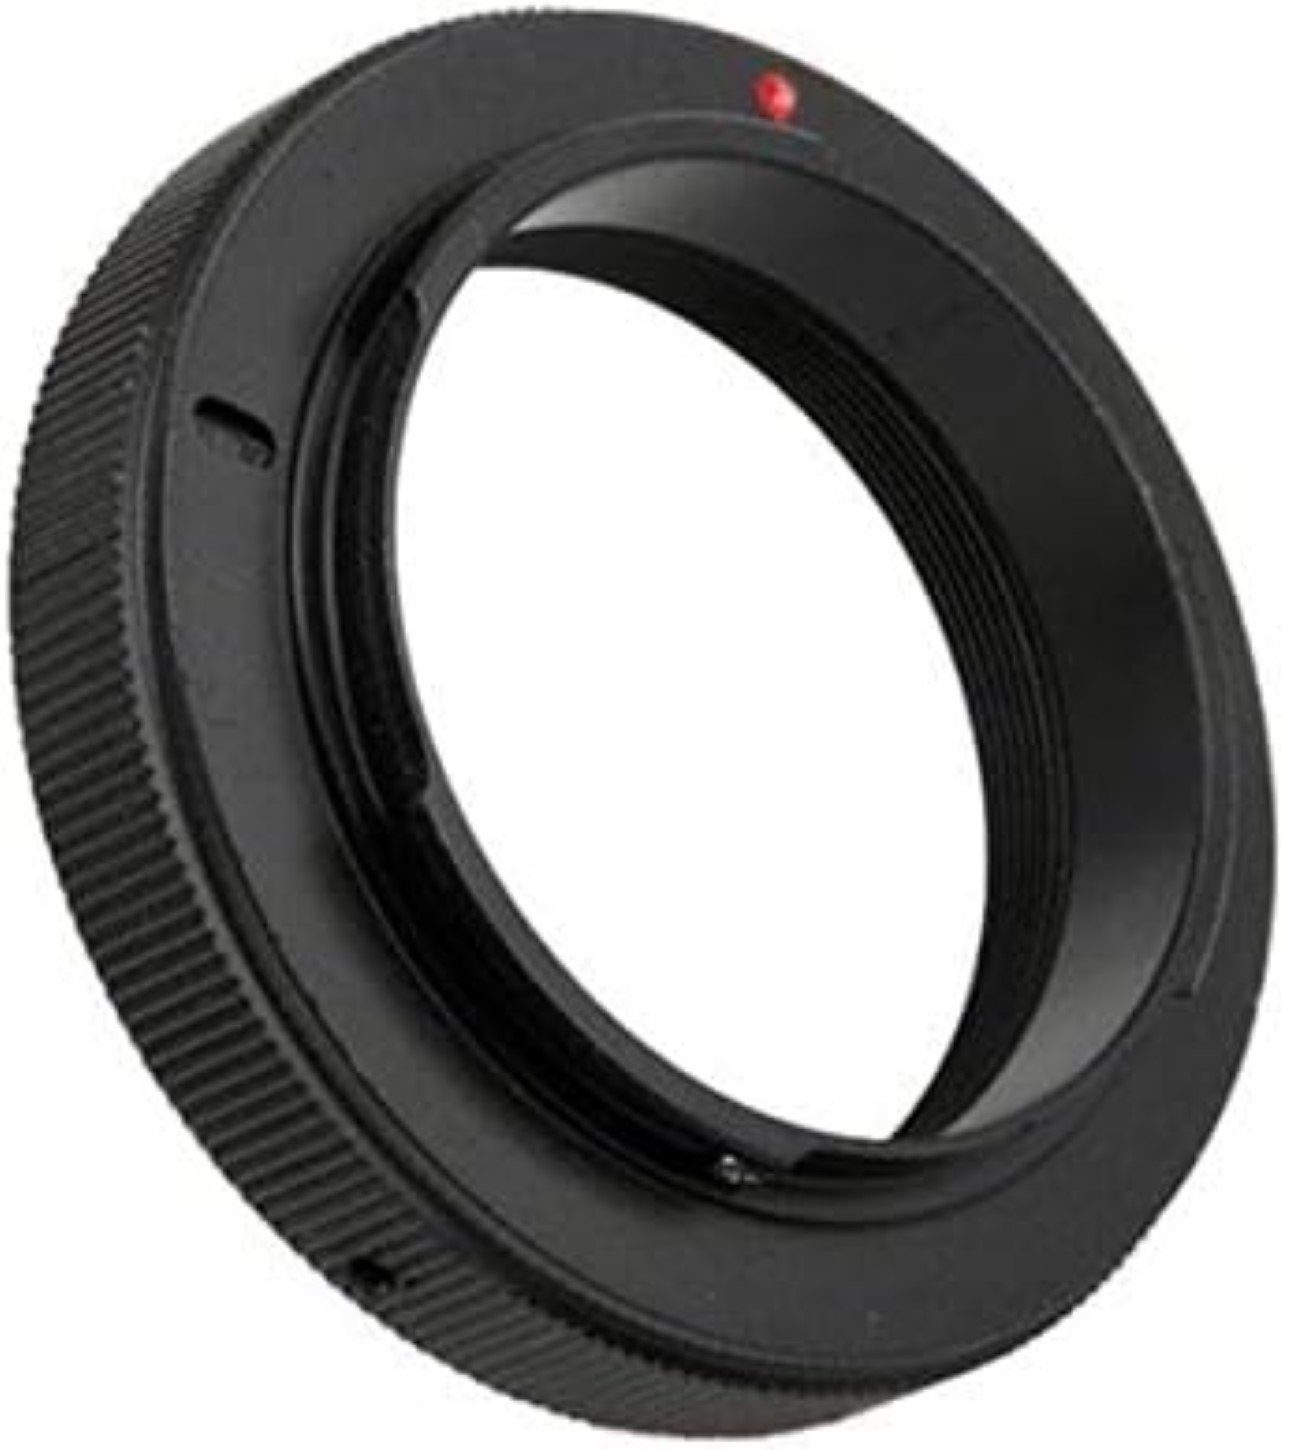 ayex T2-Objektive auf Adapter Objektiveadapter Nikon